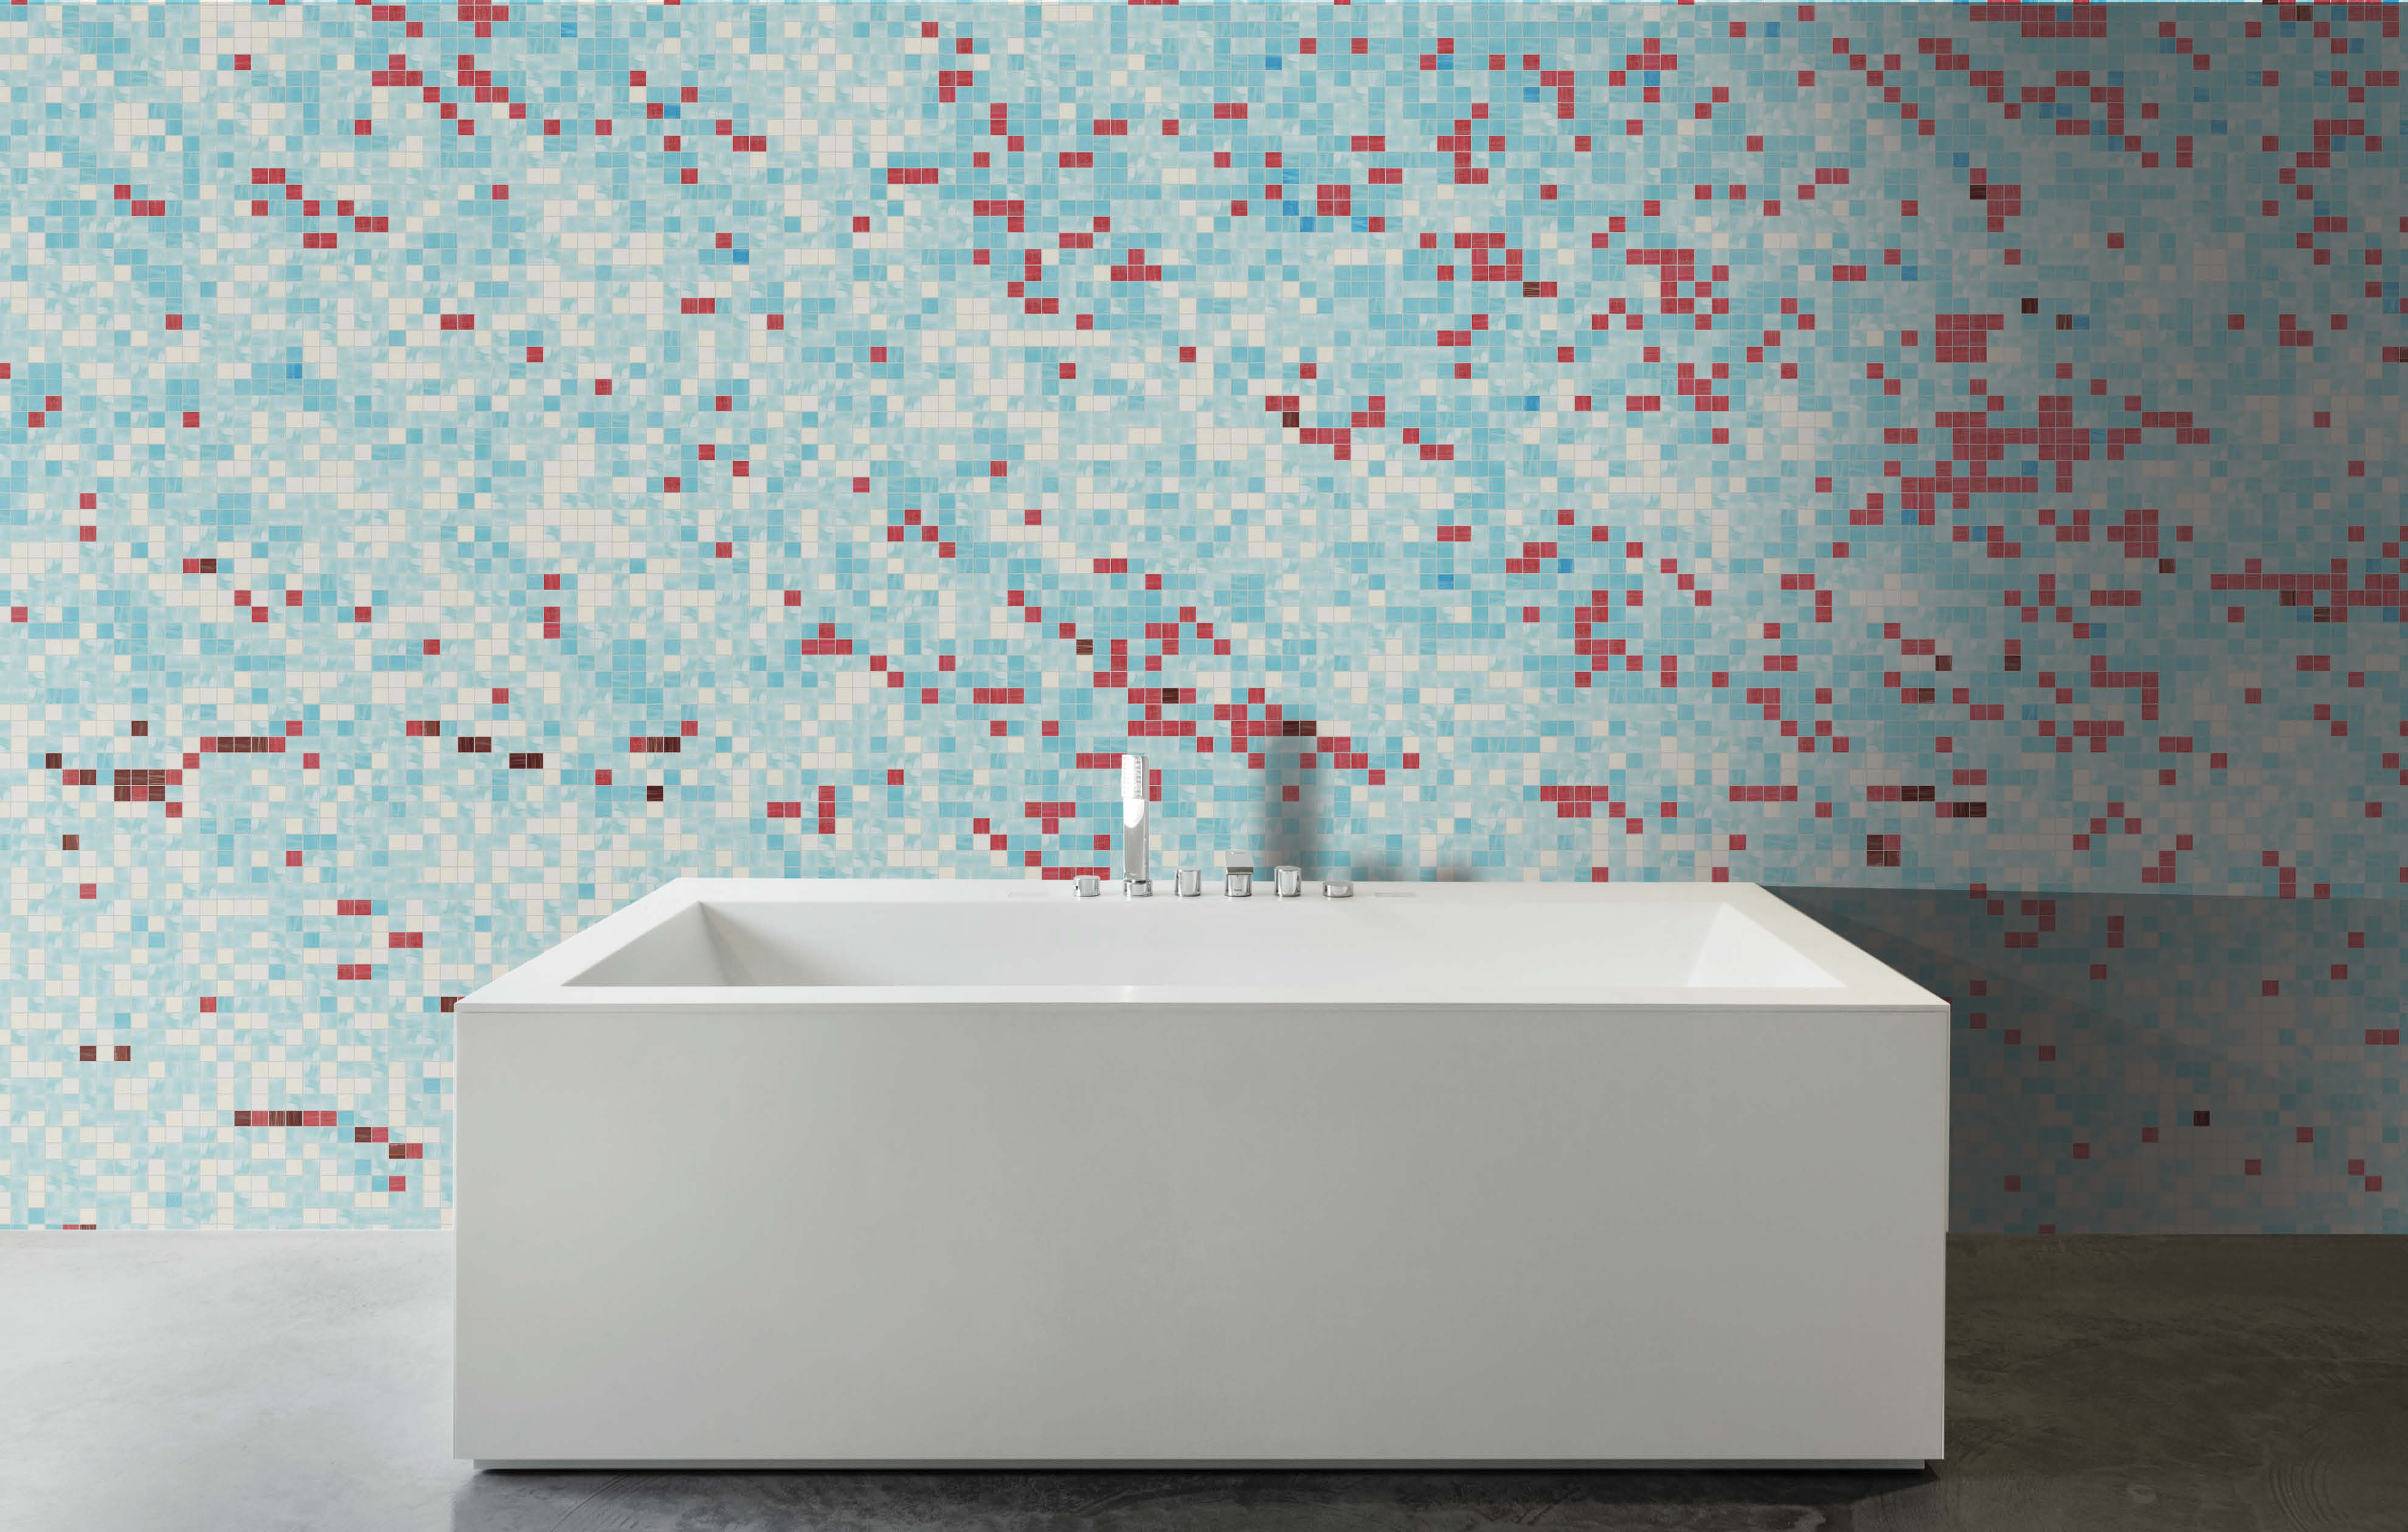 artaic-residential-living-room-red-custom-mosaic-tile-pattern-0201905